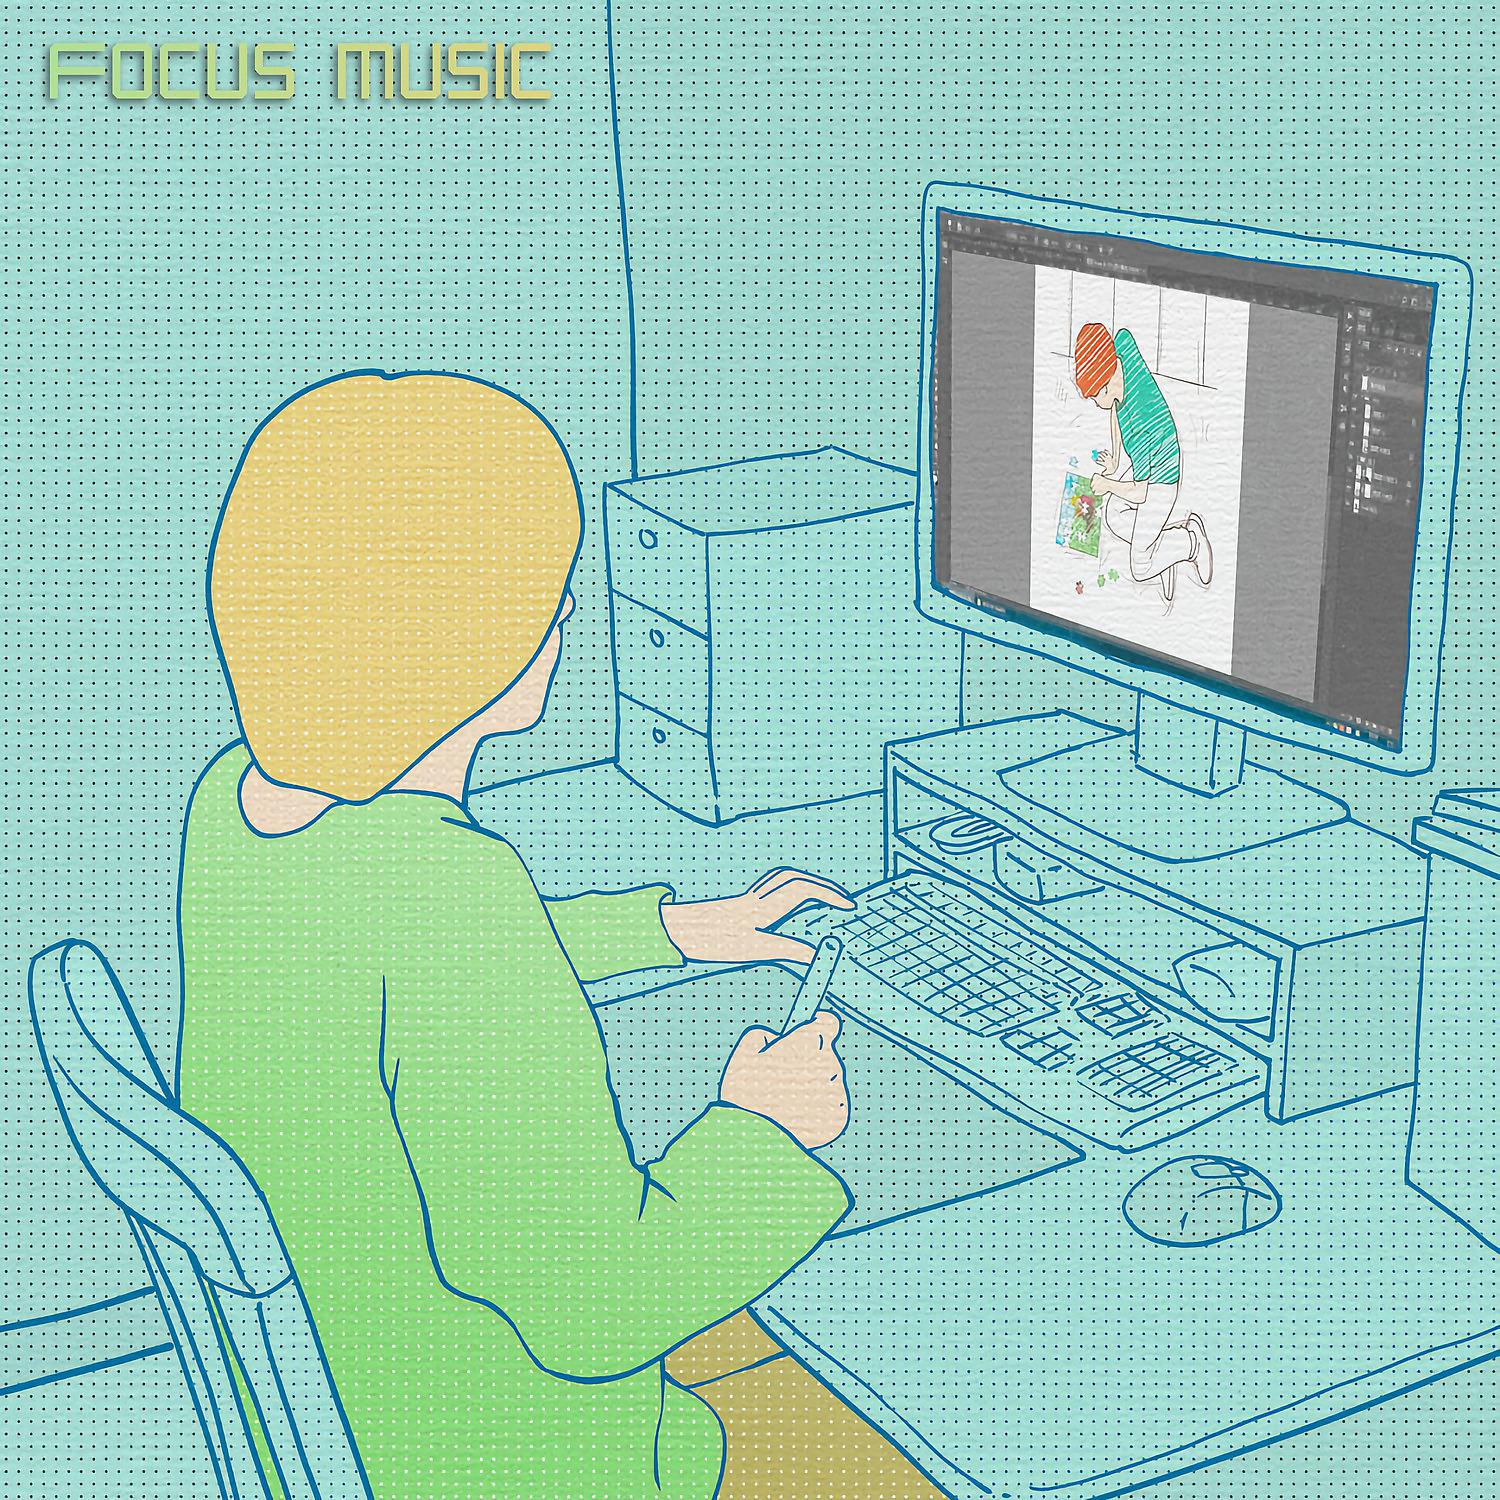 Постер альбома Focus Music